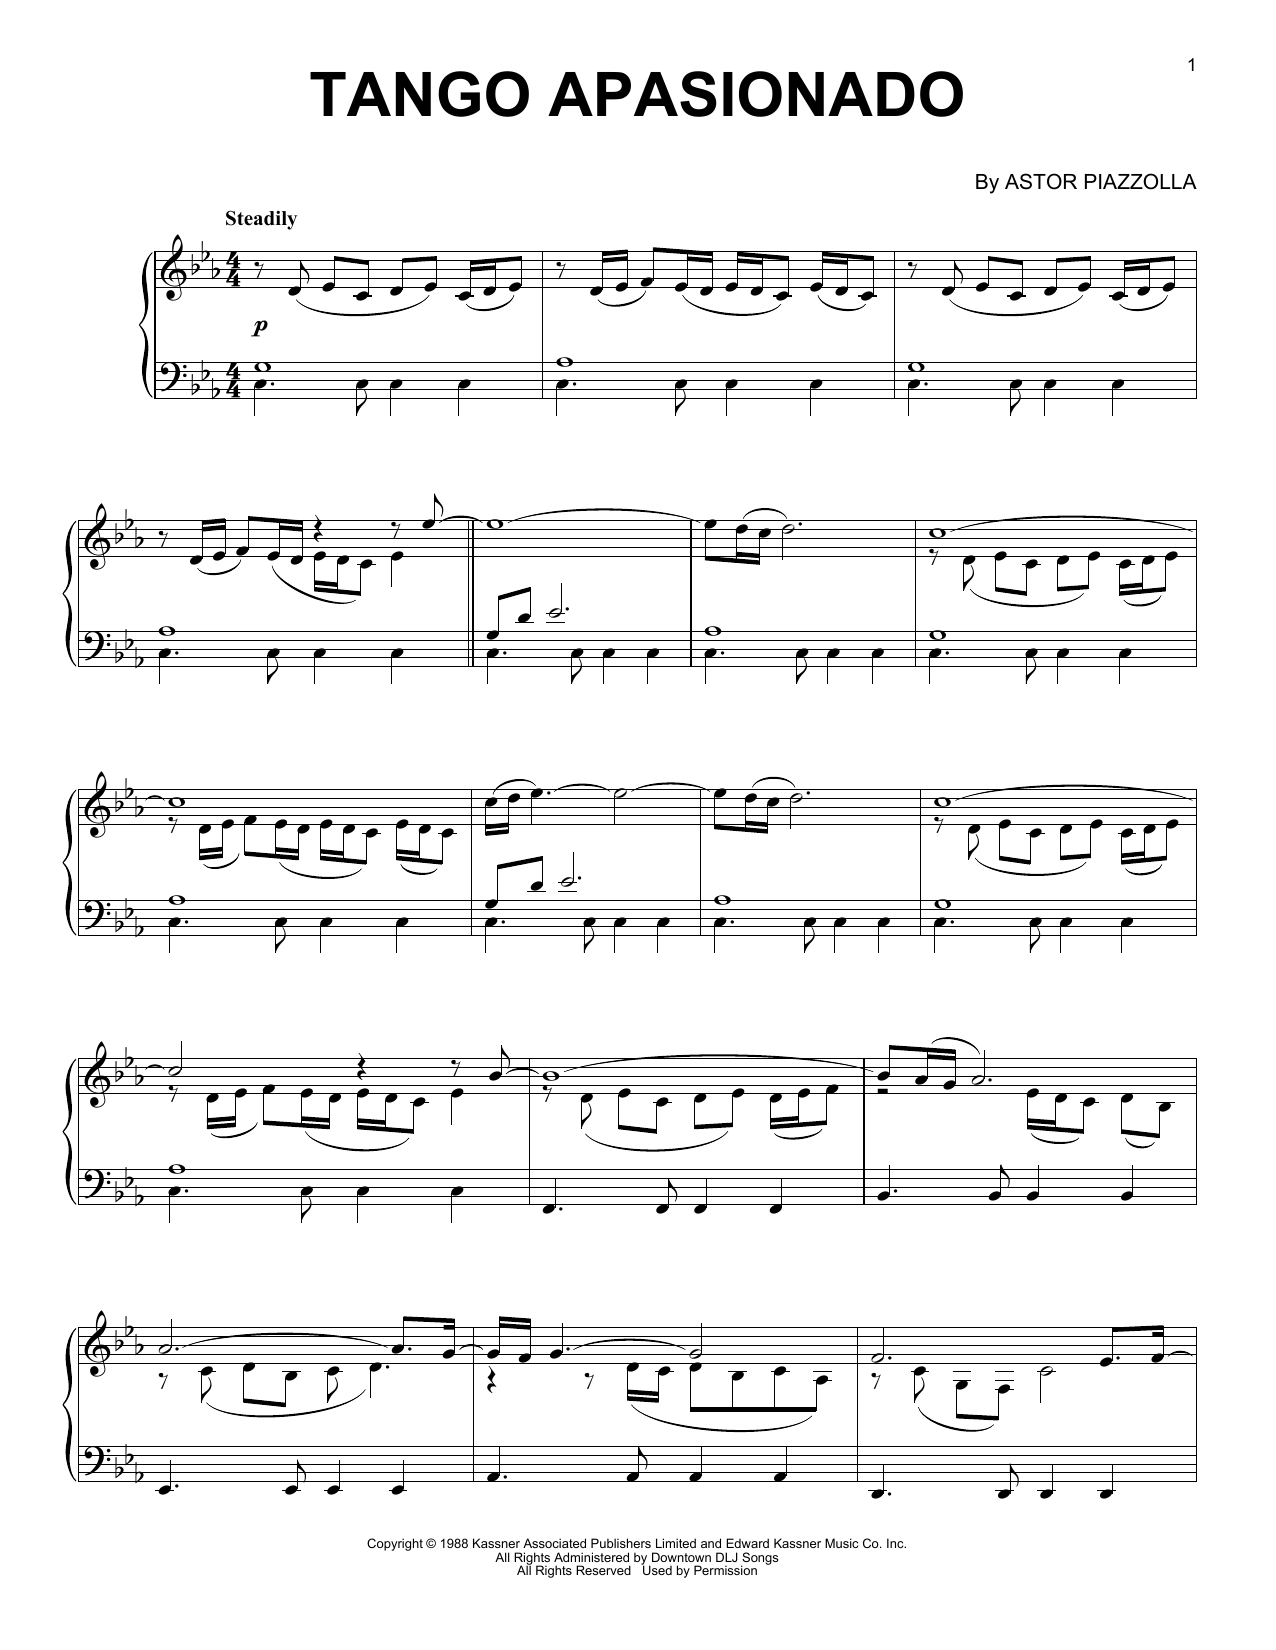 Astor Piazzolla Tango Apasionado sheet music notes and chords. Download Printable PDF.